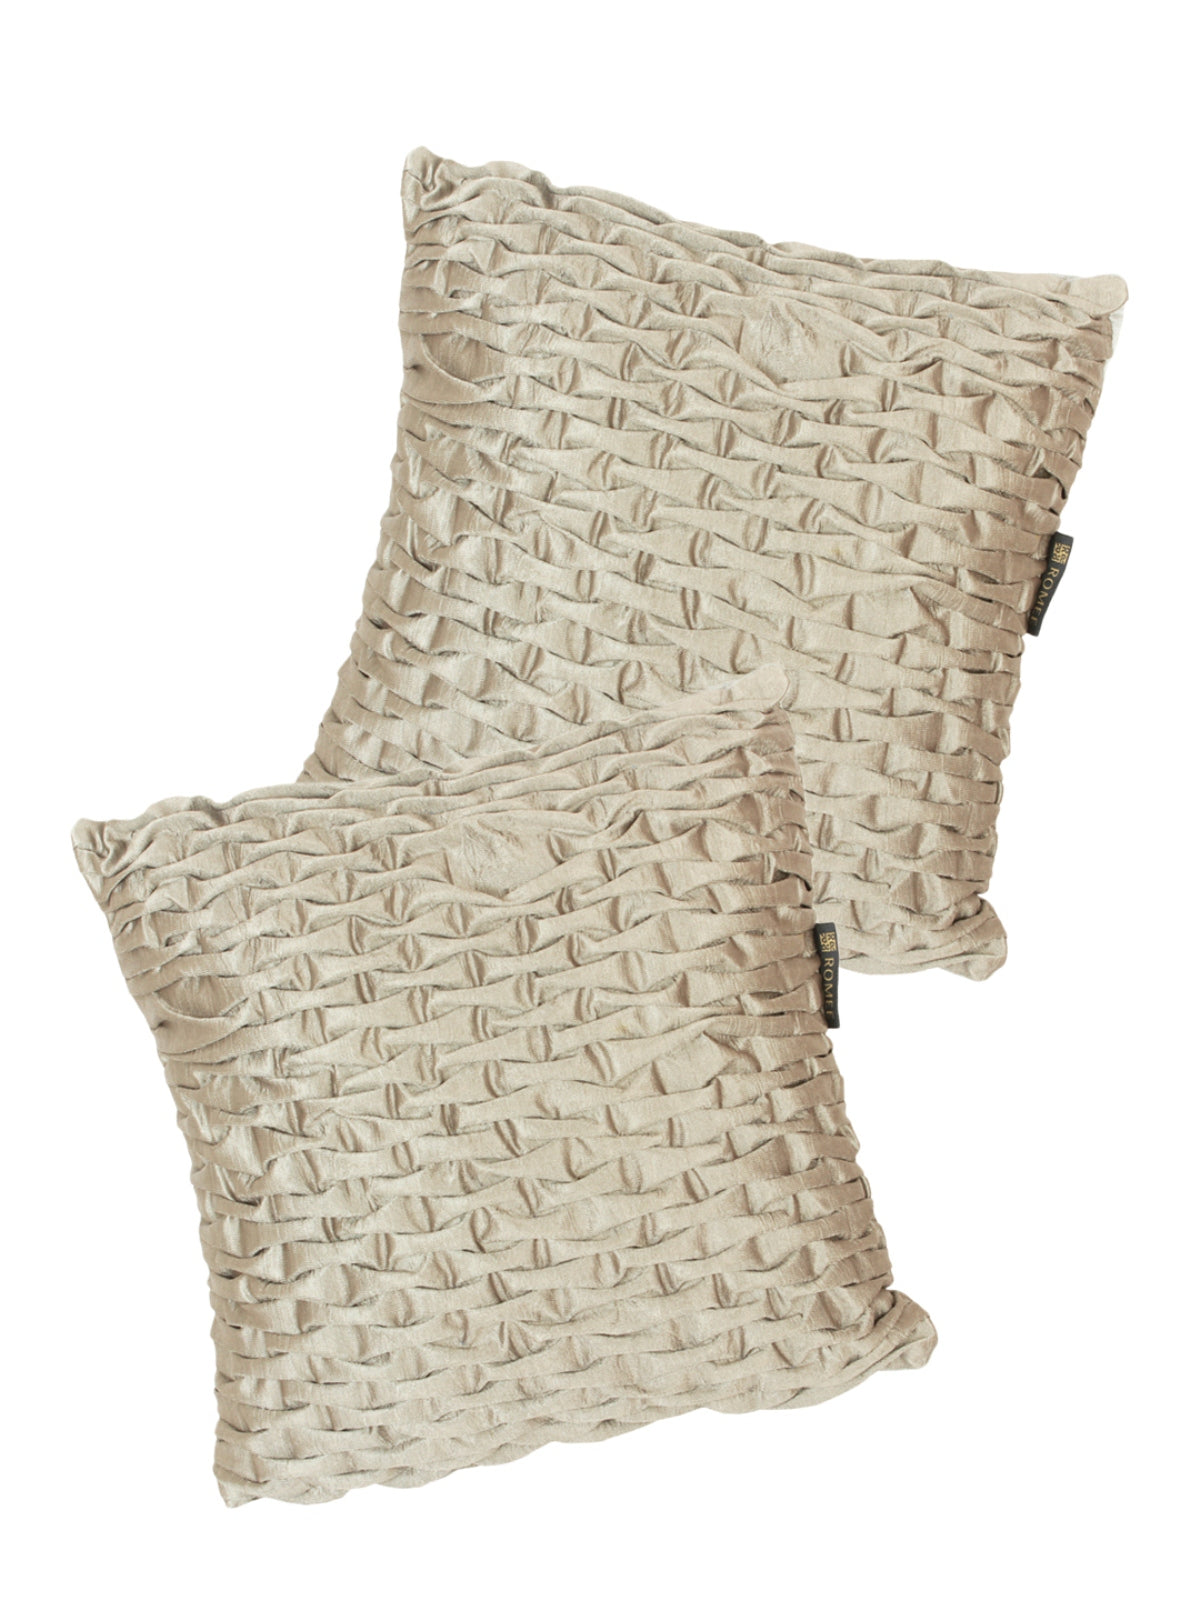 ROMEE Silver Geometric Printed Cushion Covers Set of 2